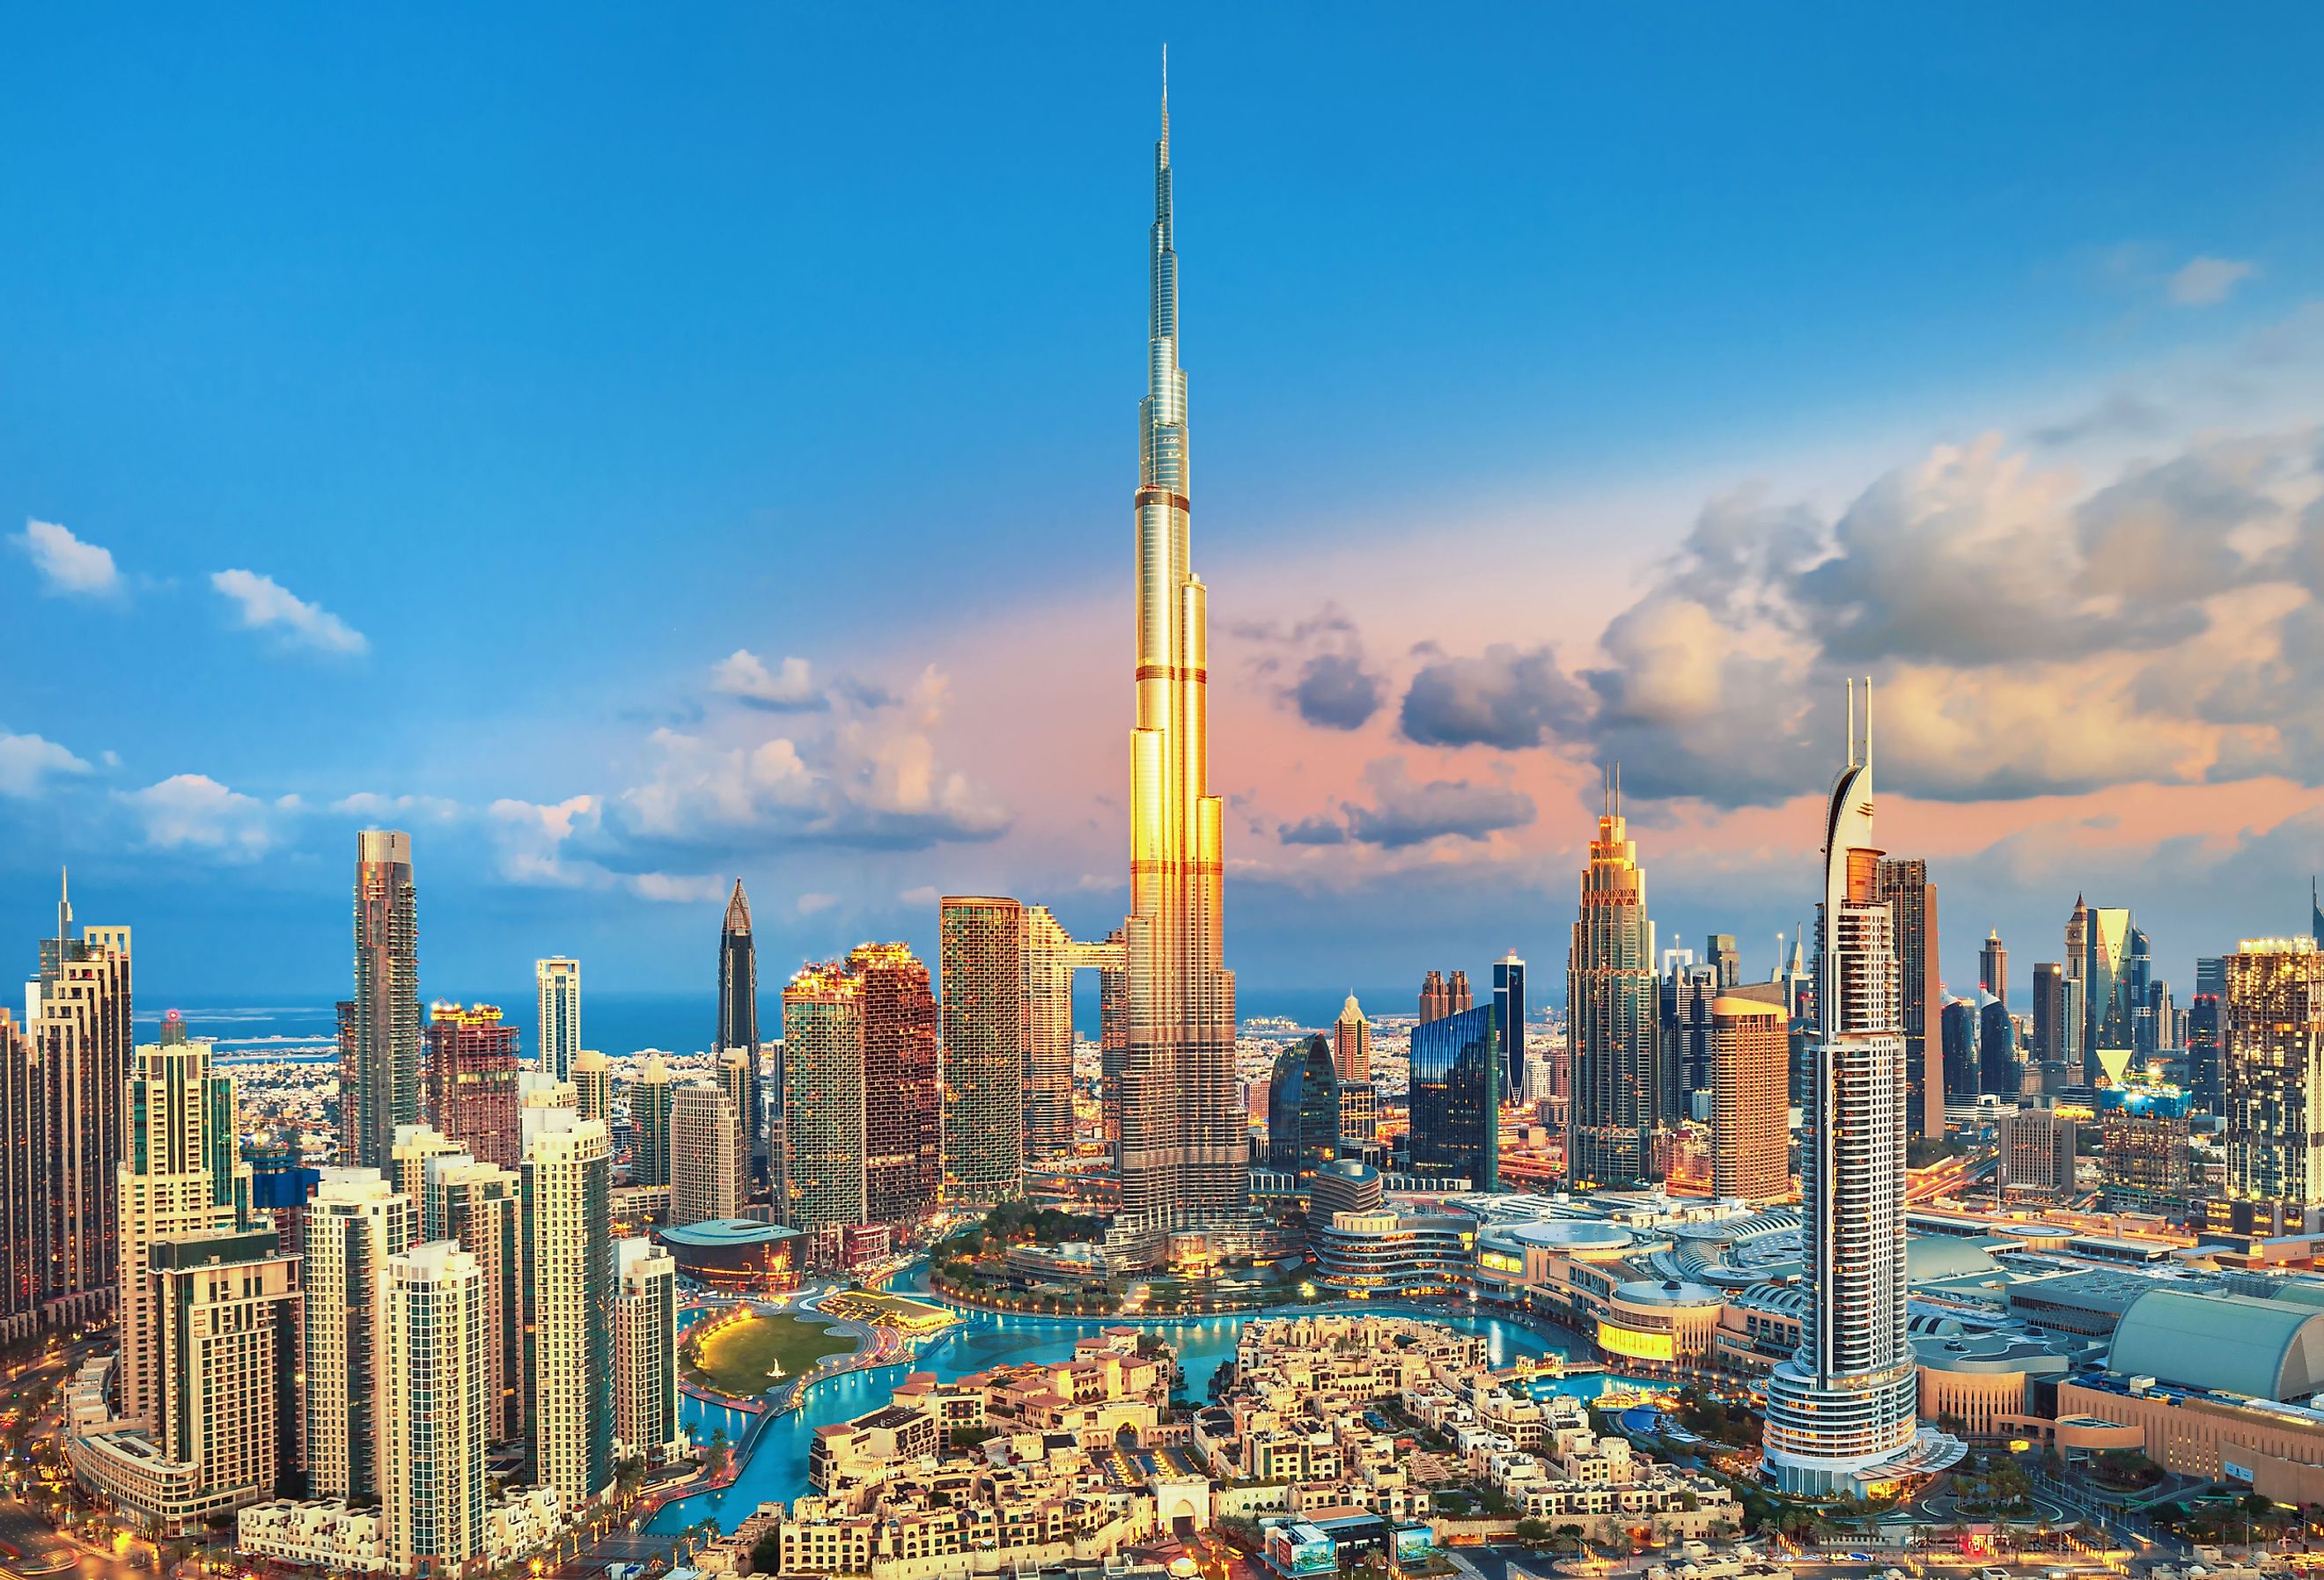 Dubai's amazing city center skyline with luxury skyscrapers, United Arab Emirates. 